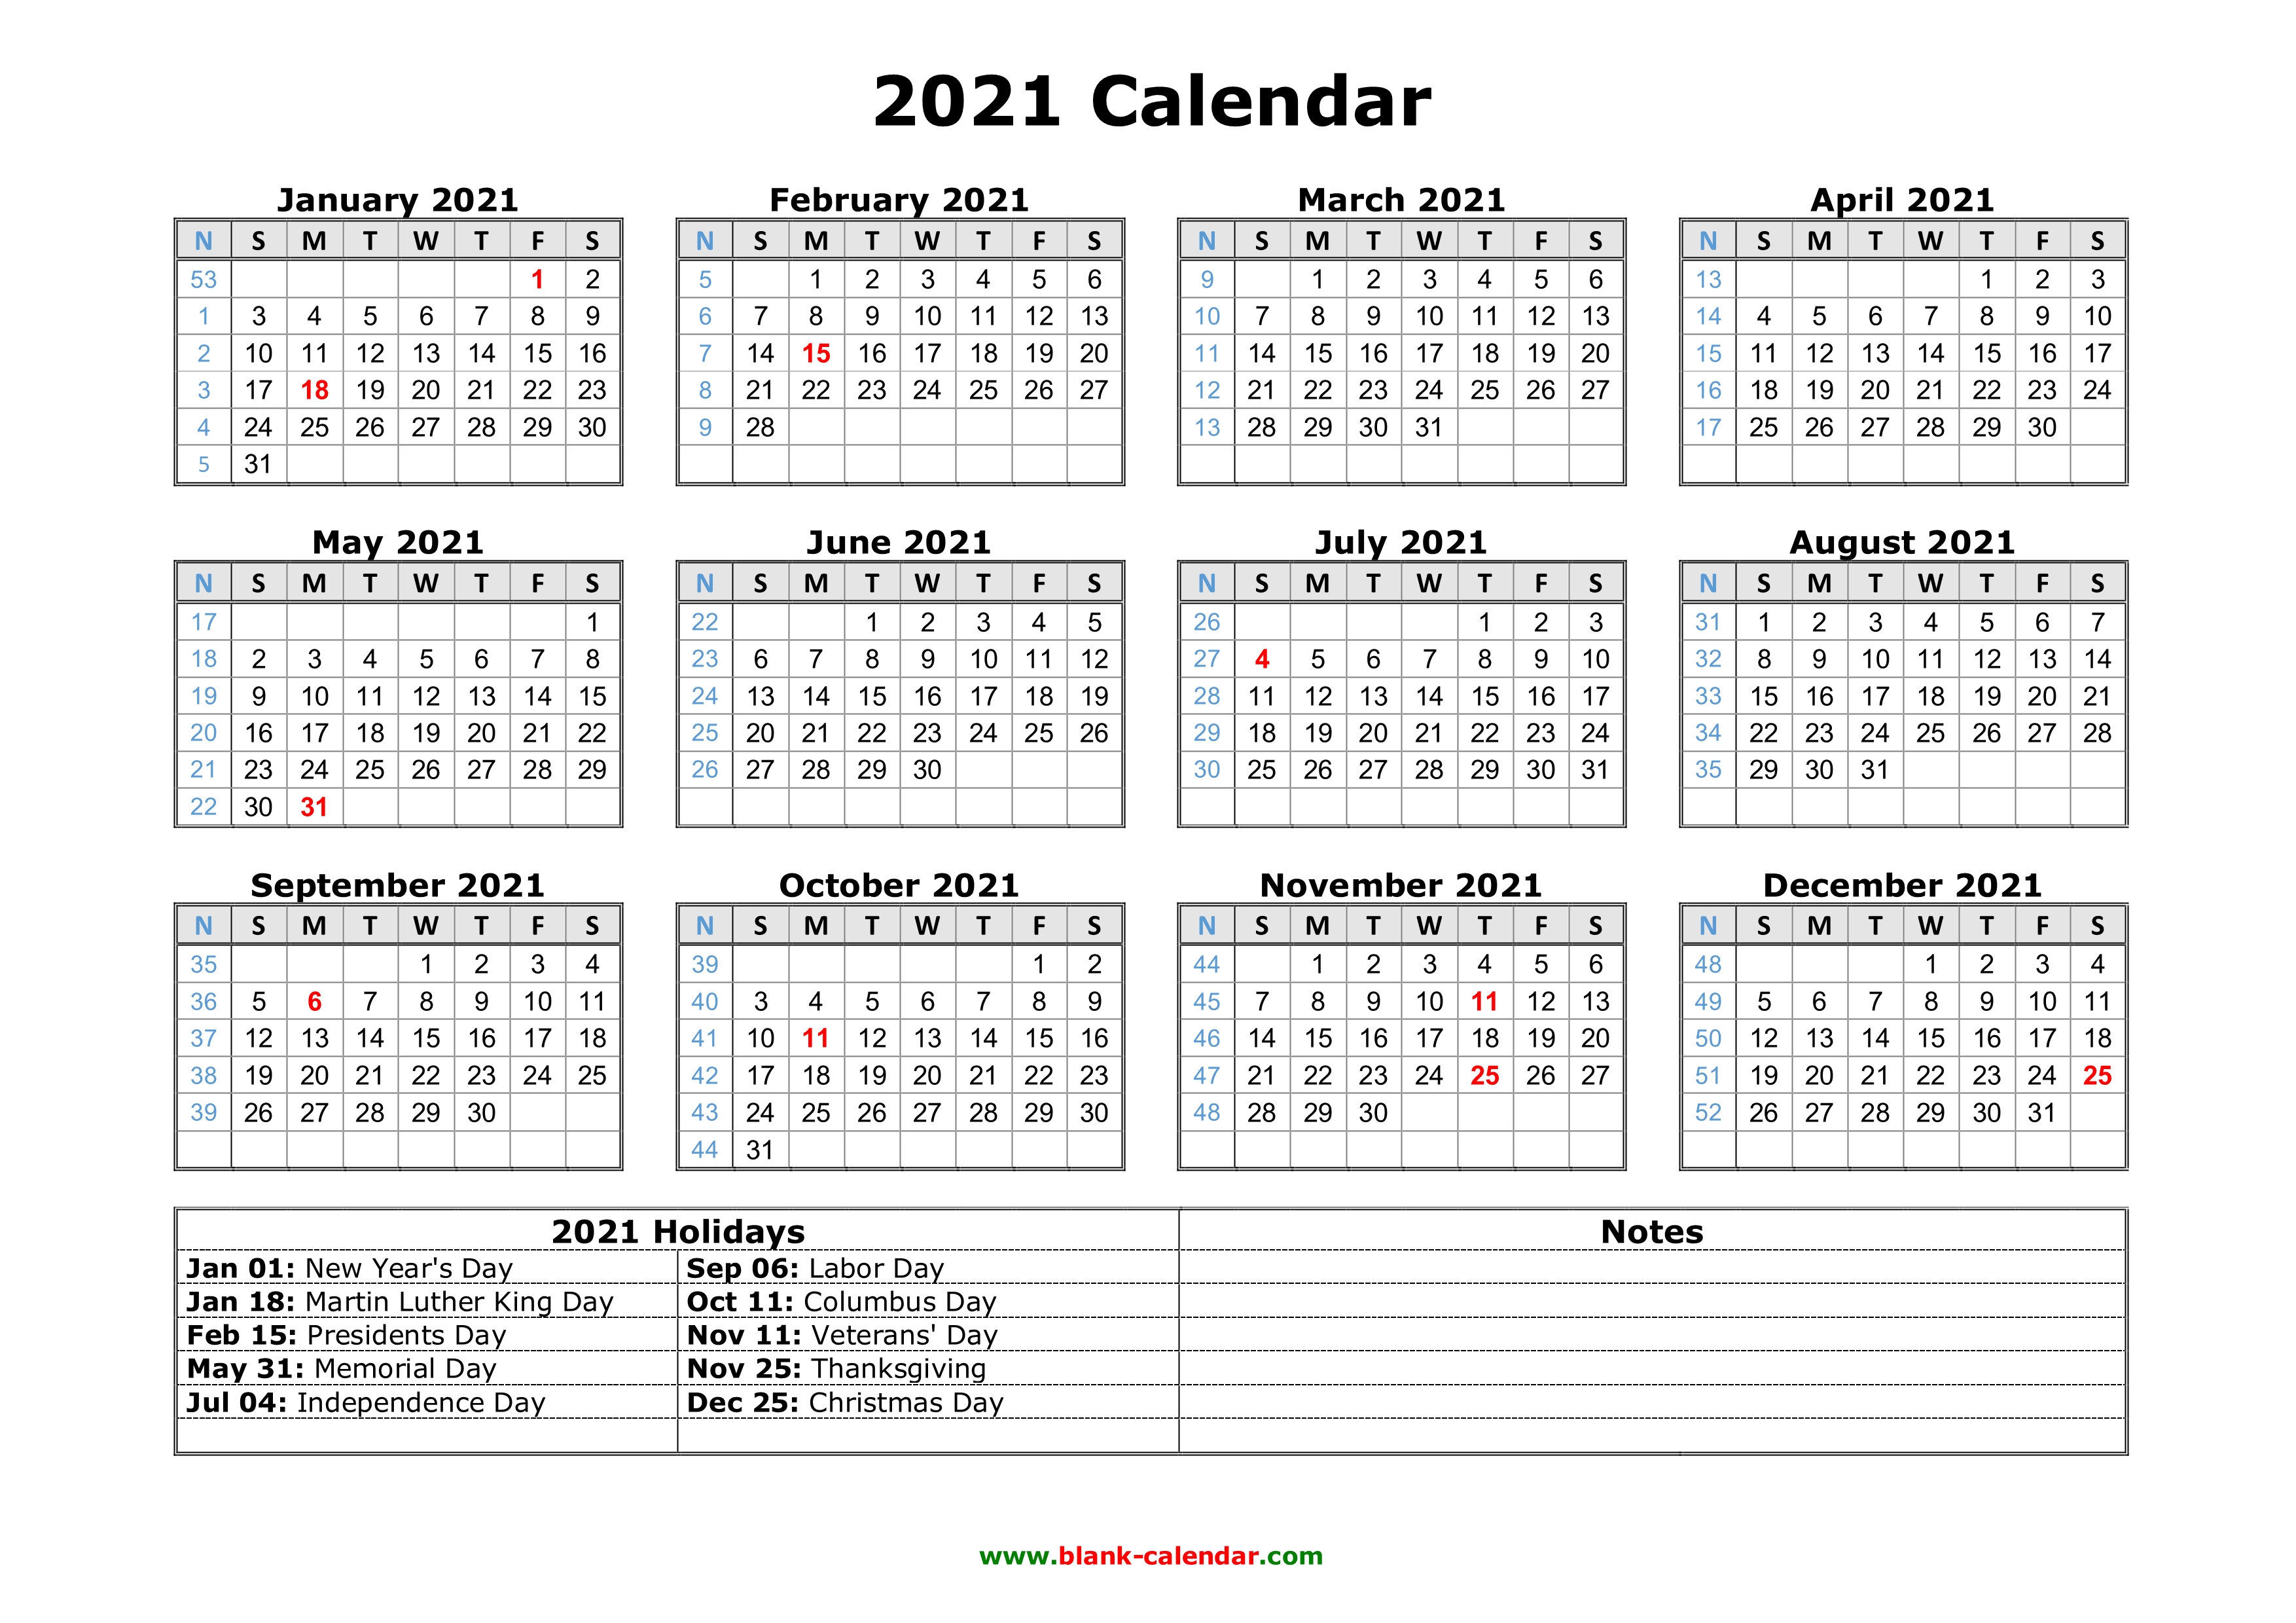 October 2021 Holiday Calendar January 2021